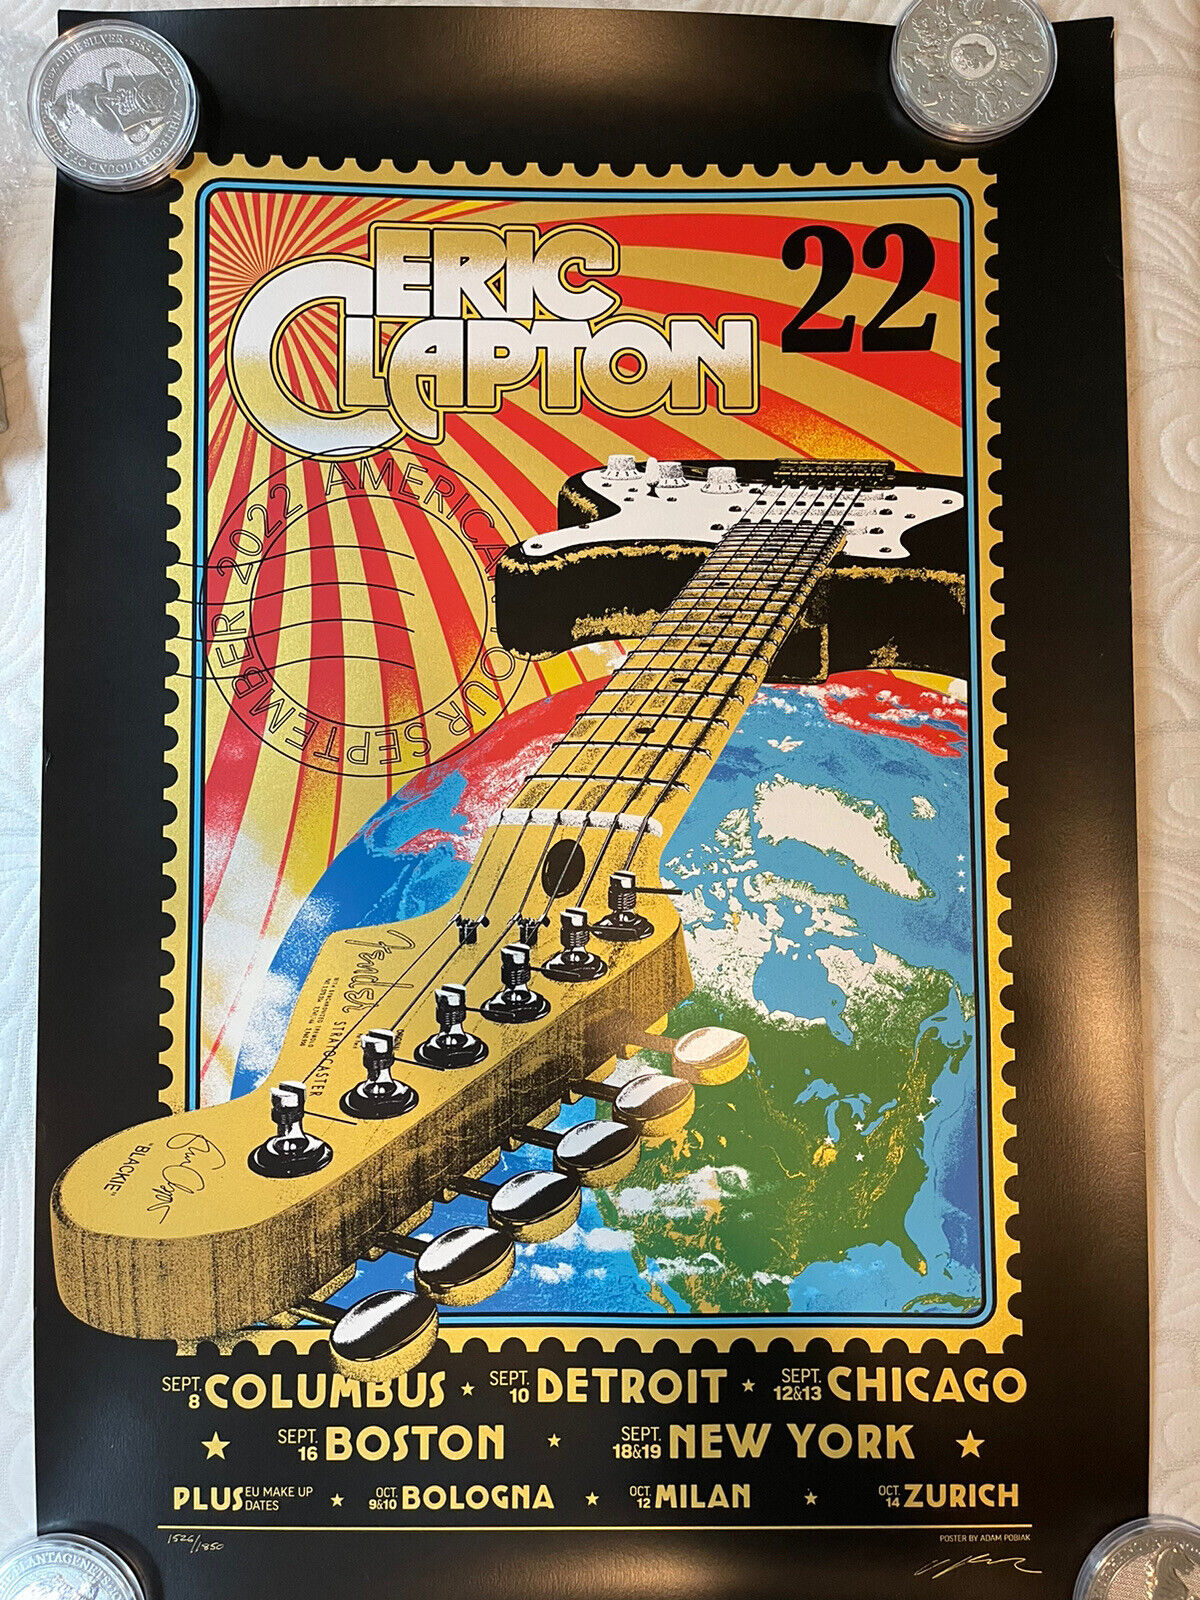 Eric Clapton Poster America Tour 2022 Signed Adam Pobiak #1526/1850 Ltd Msg Nyc